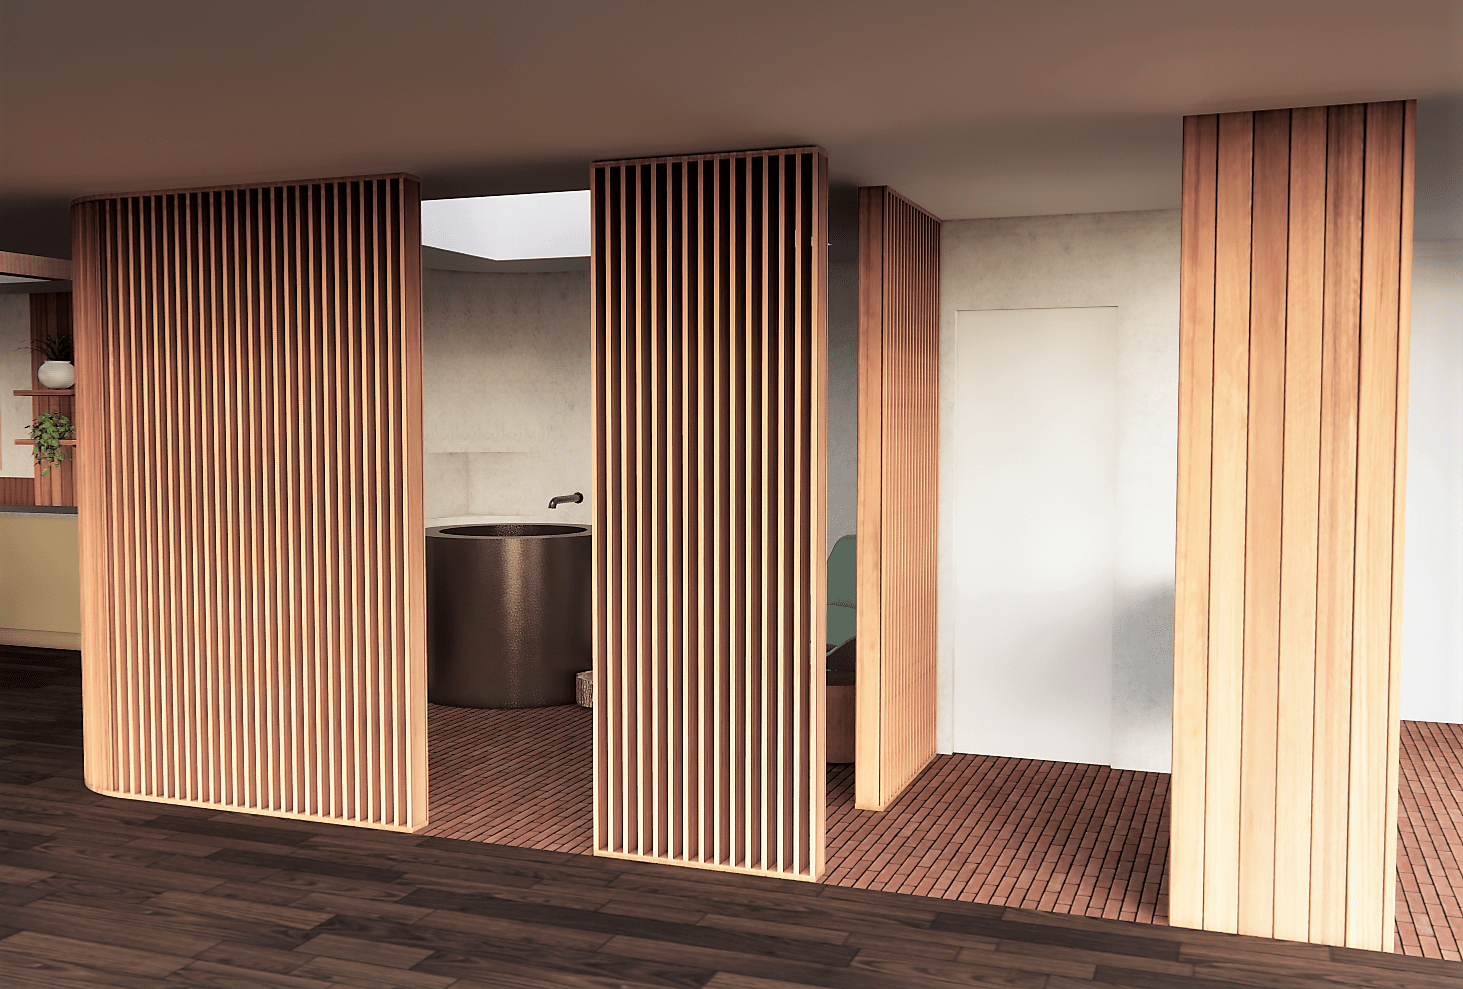 View into atrium bath with copper tub, terra cotta tile floors, doug fir slat walls